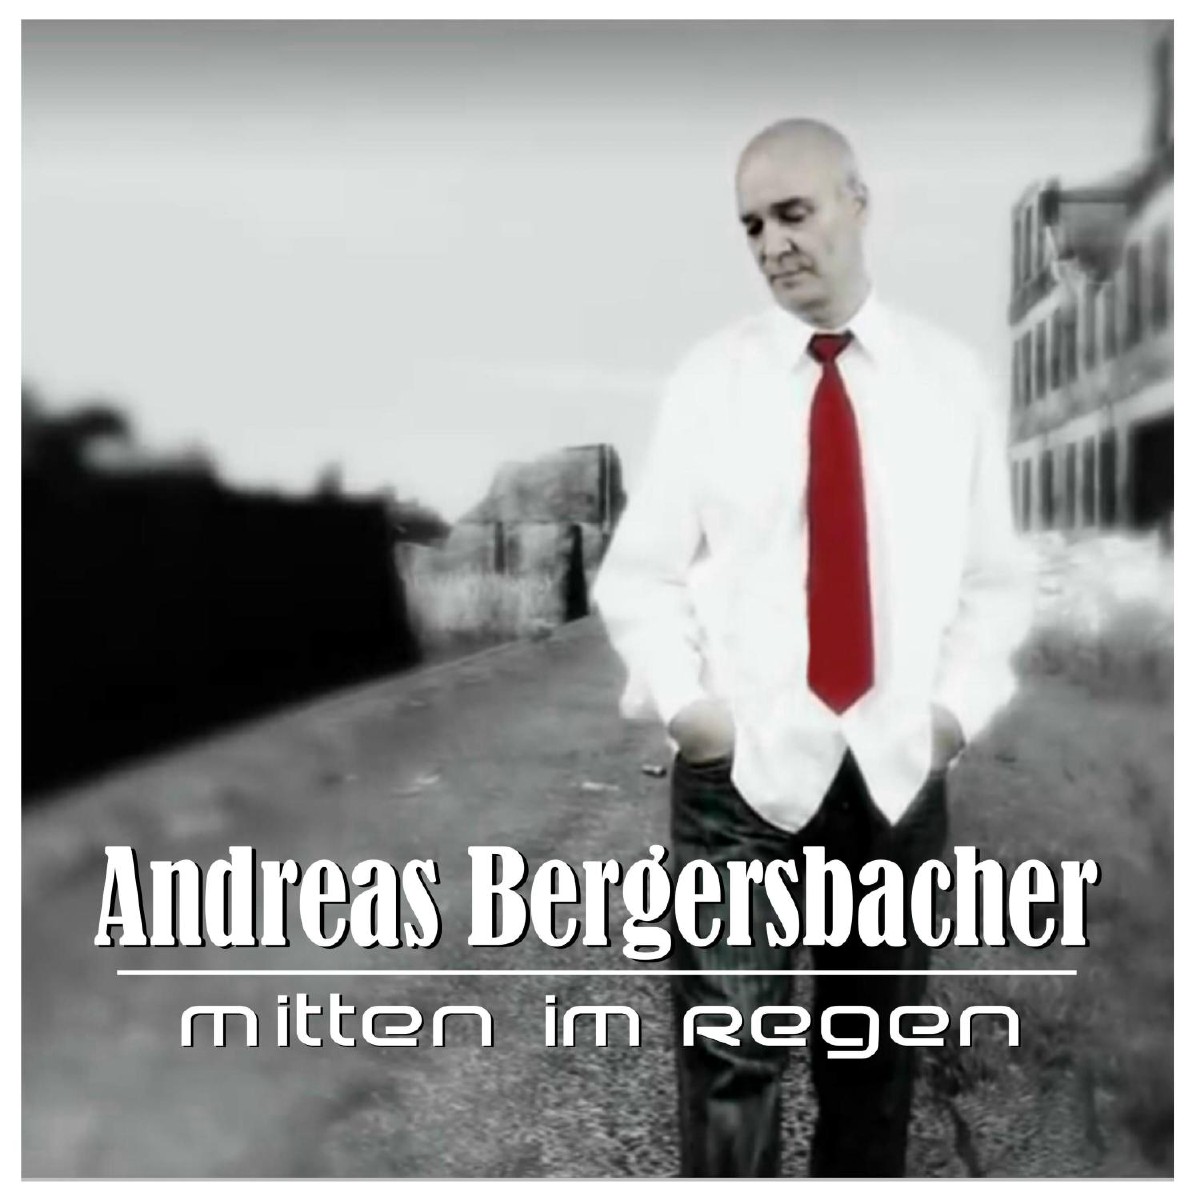 Andreas Bergersbacher Mitten im Regen